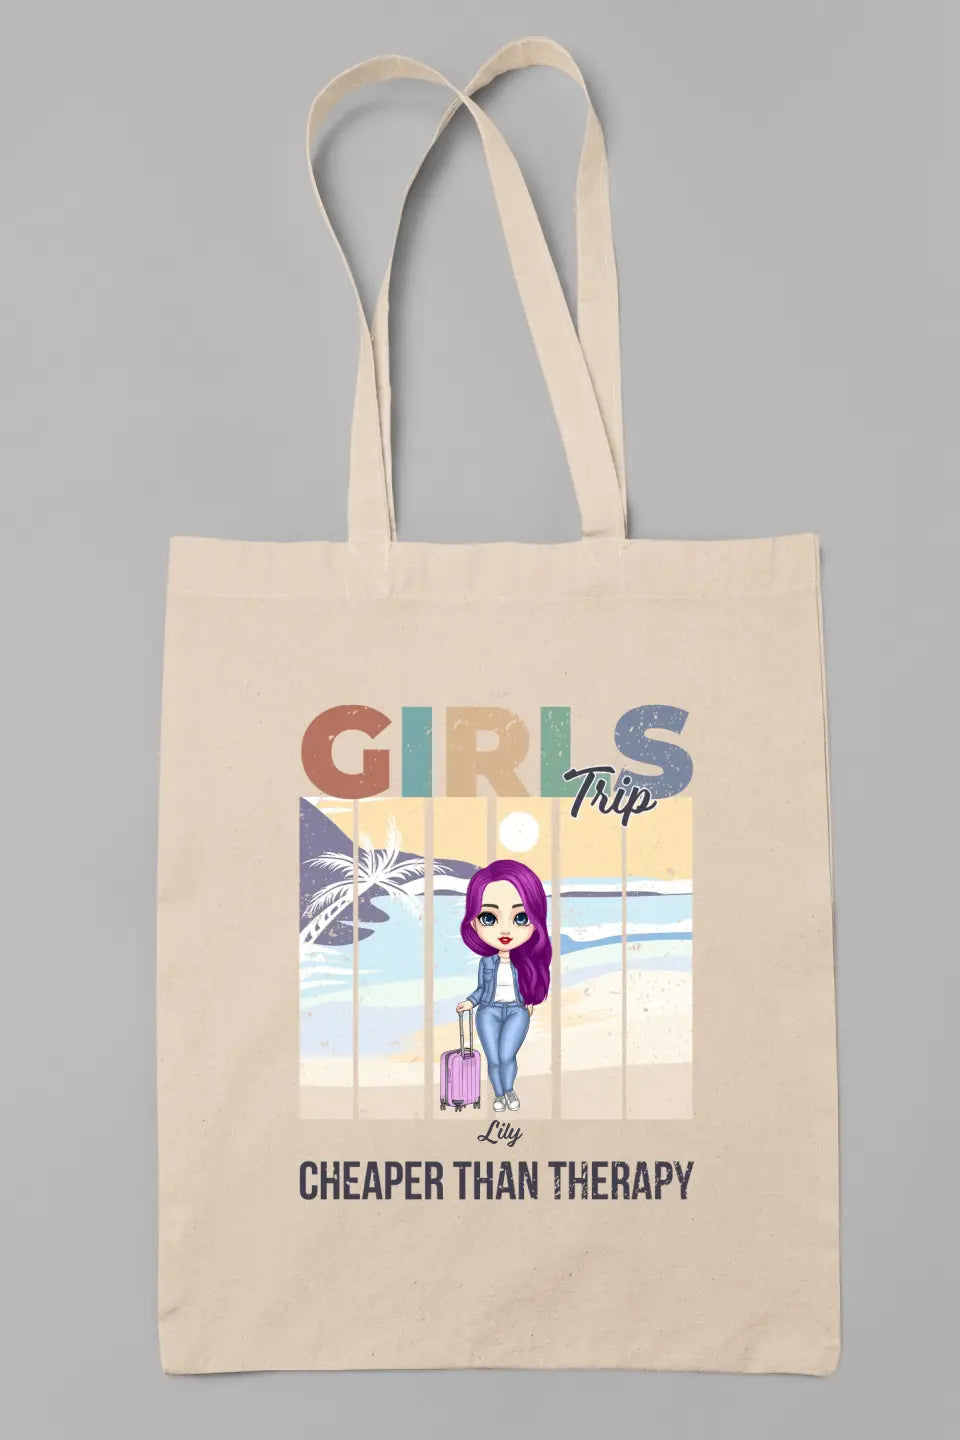 Girls Trip. Cheaper Than Therapy